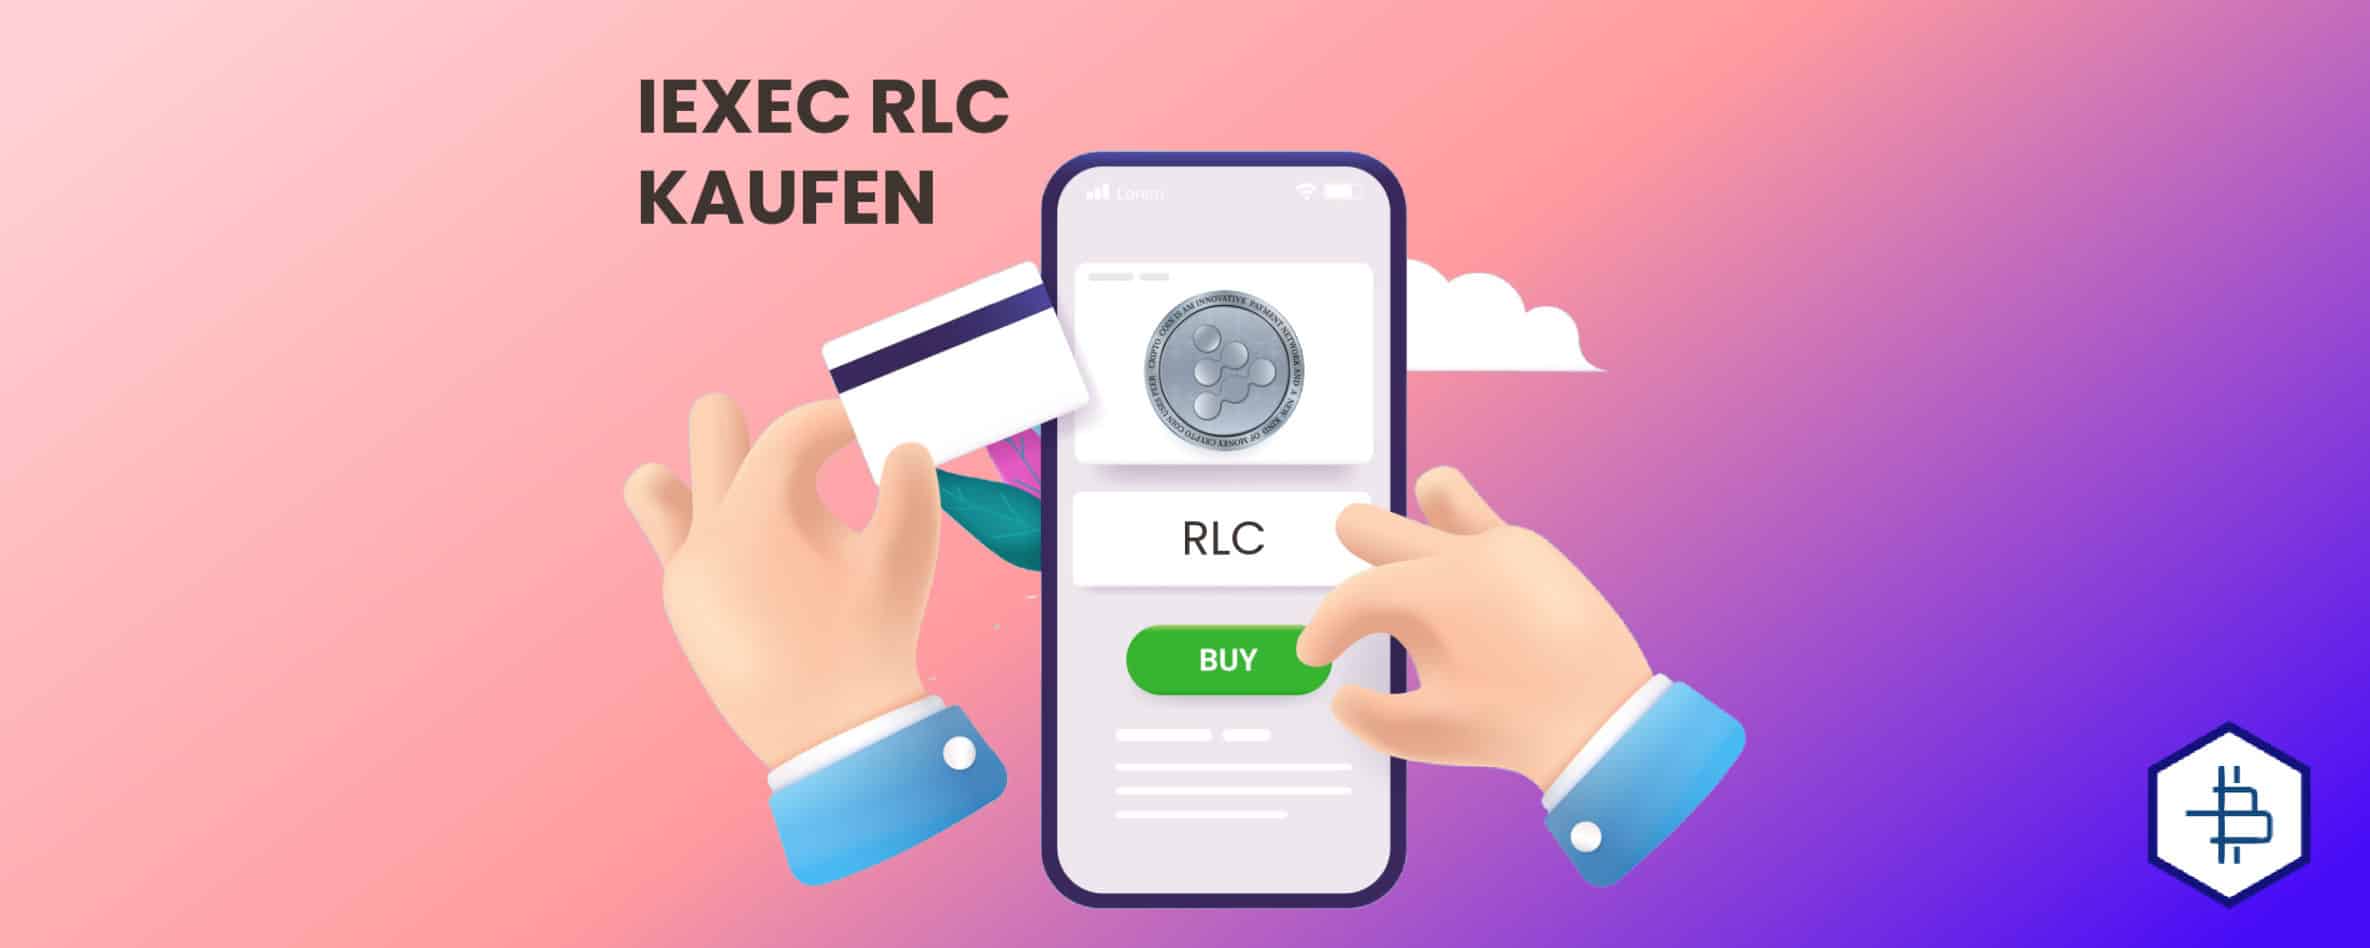 iExec RLC kaufen